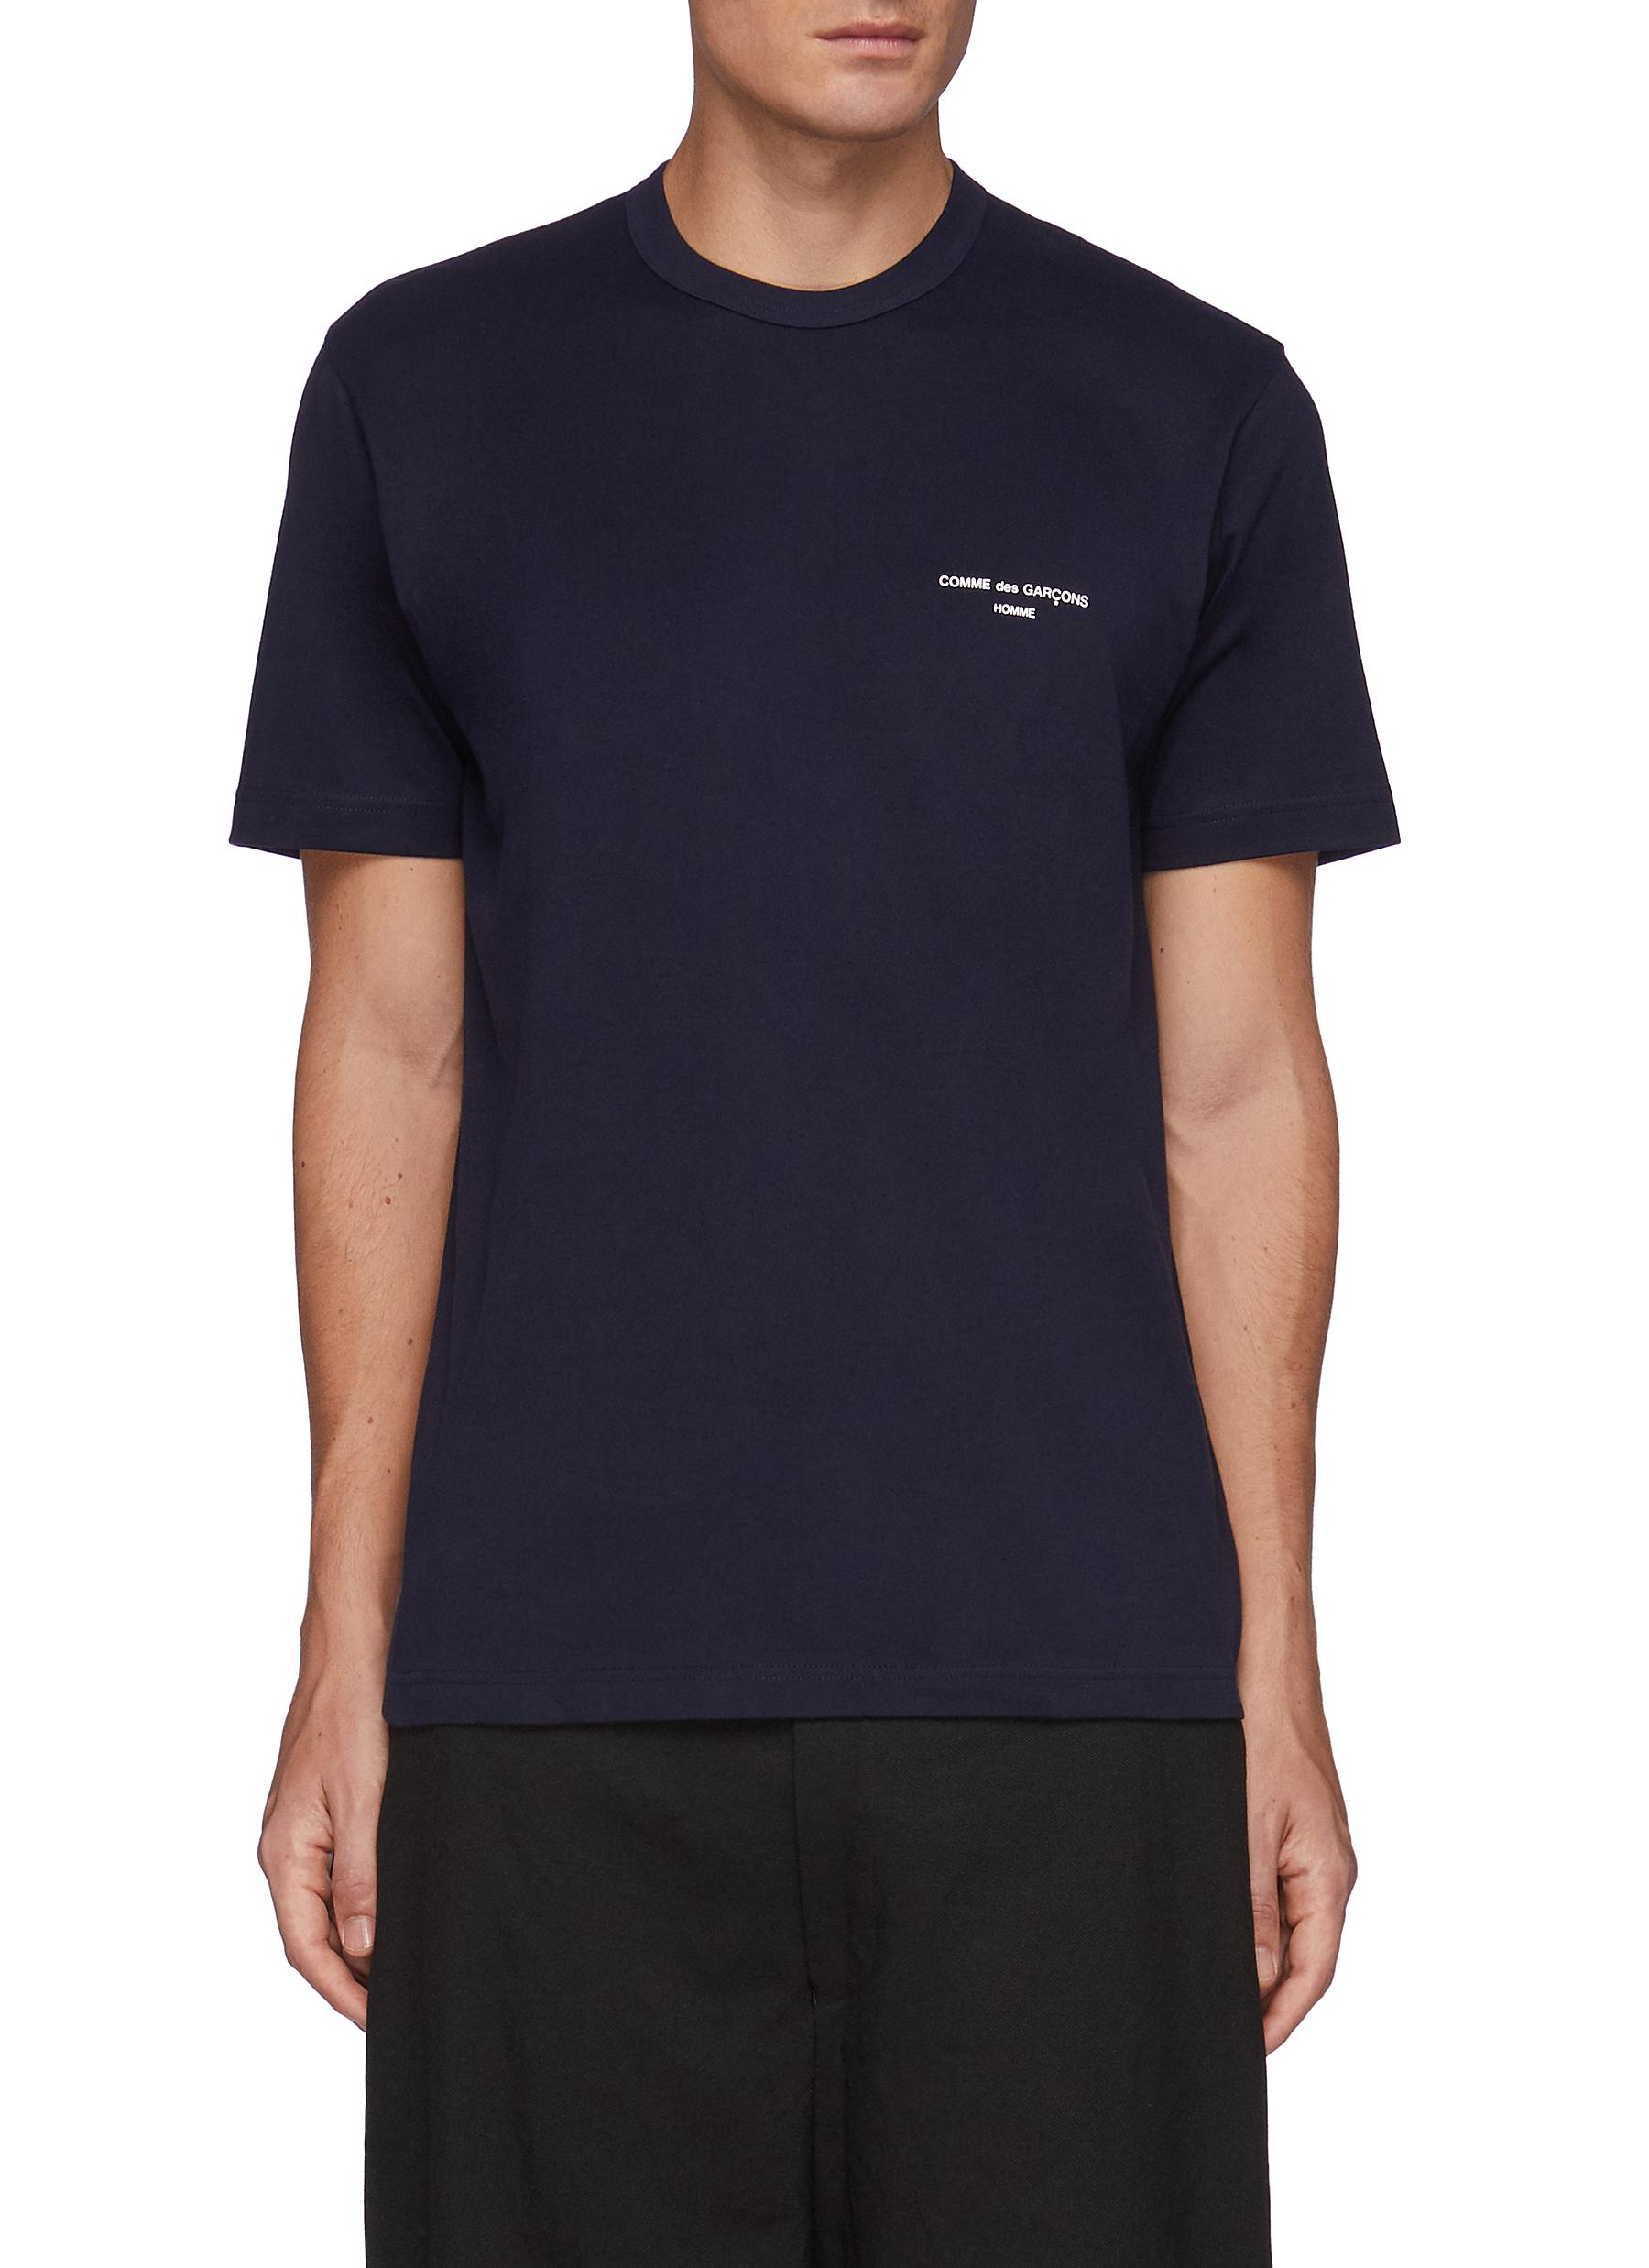 Branding Appliqued Short Sleeved Crewneck Cotton T-Shirt